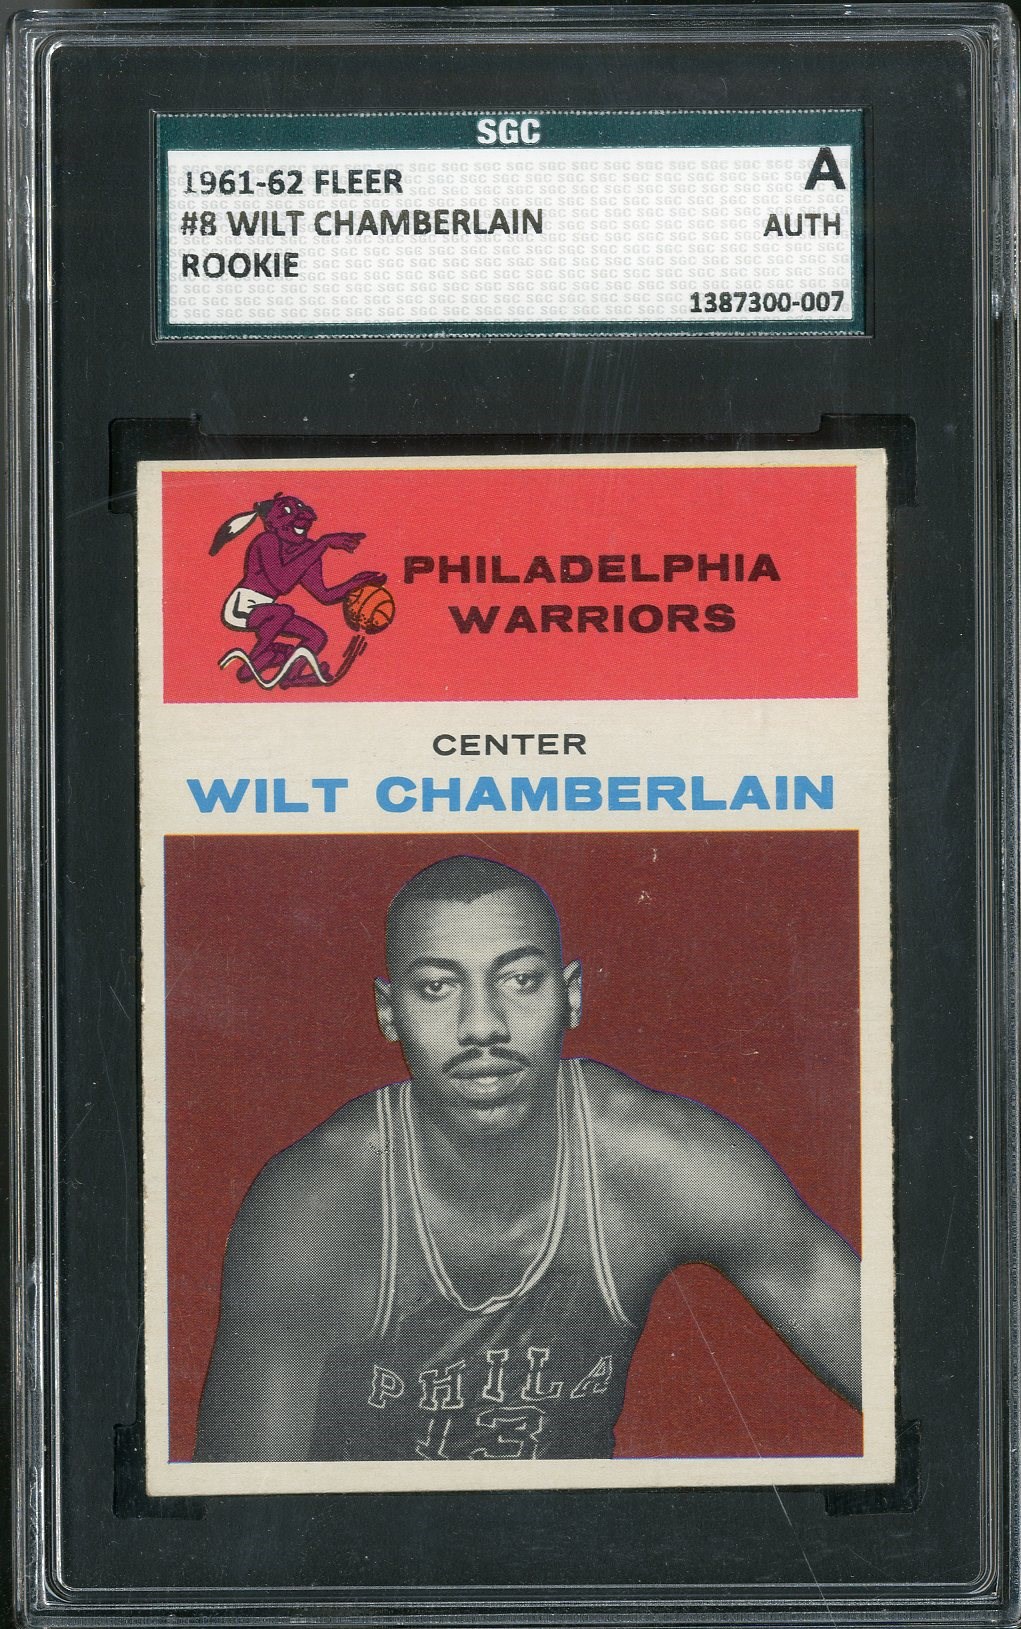 - 1961 Fleer Wilt Chamberlain #8 Rookie Card (SGC Authentic)